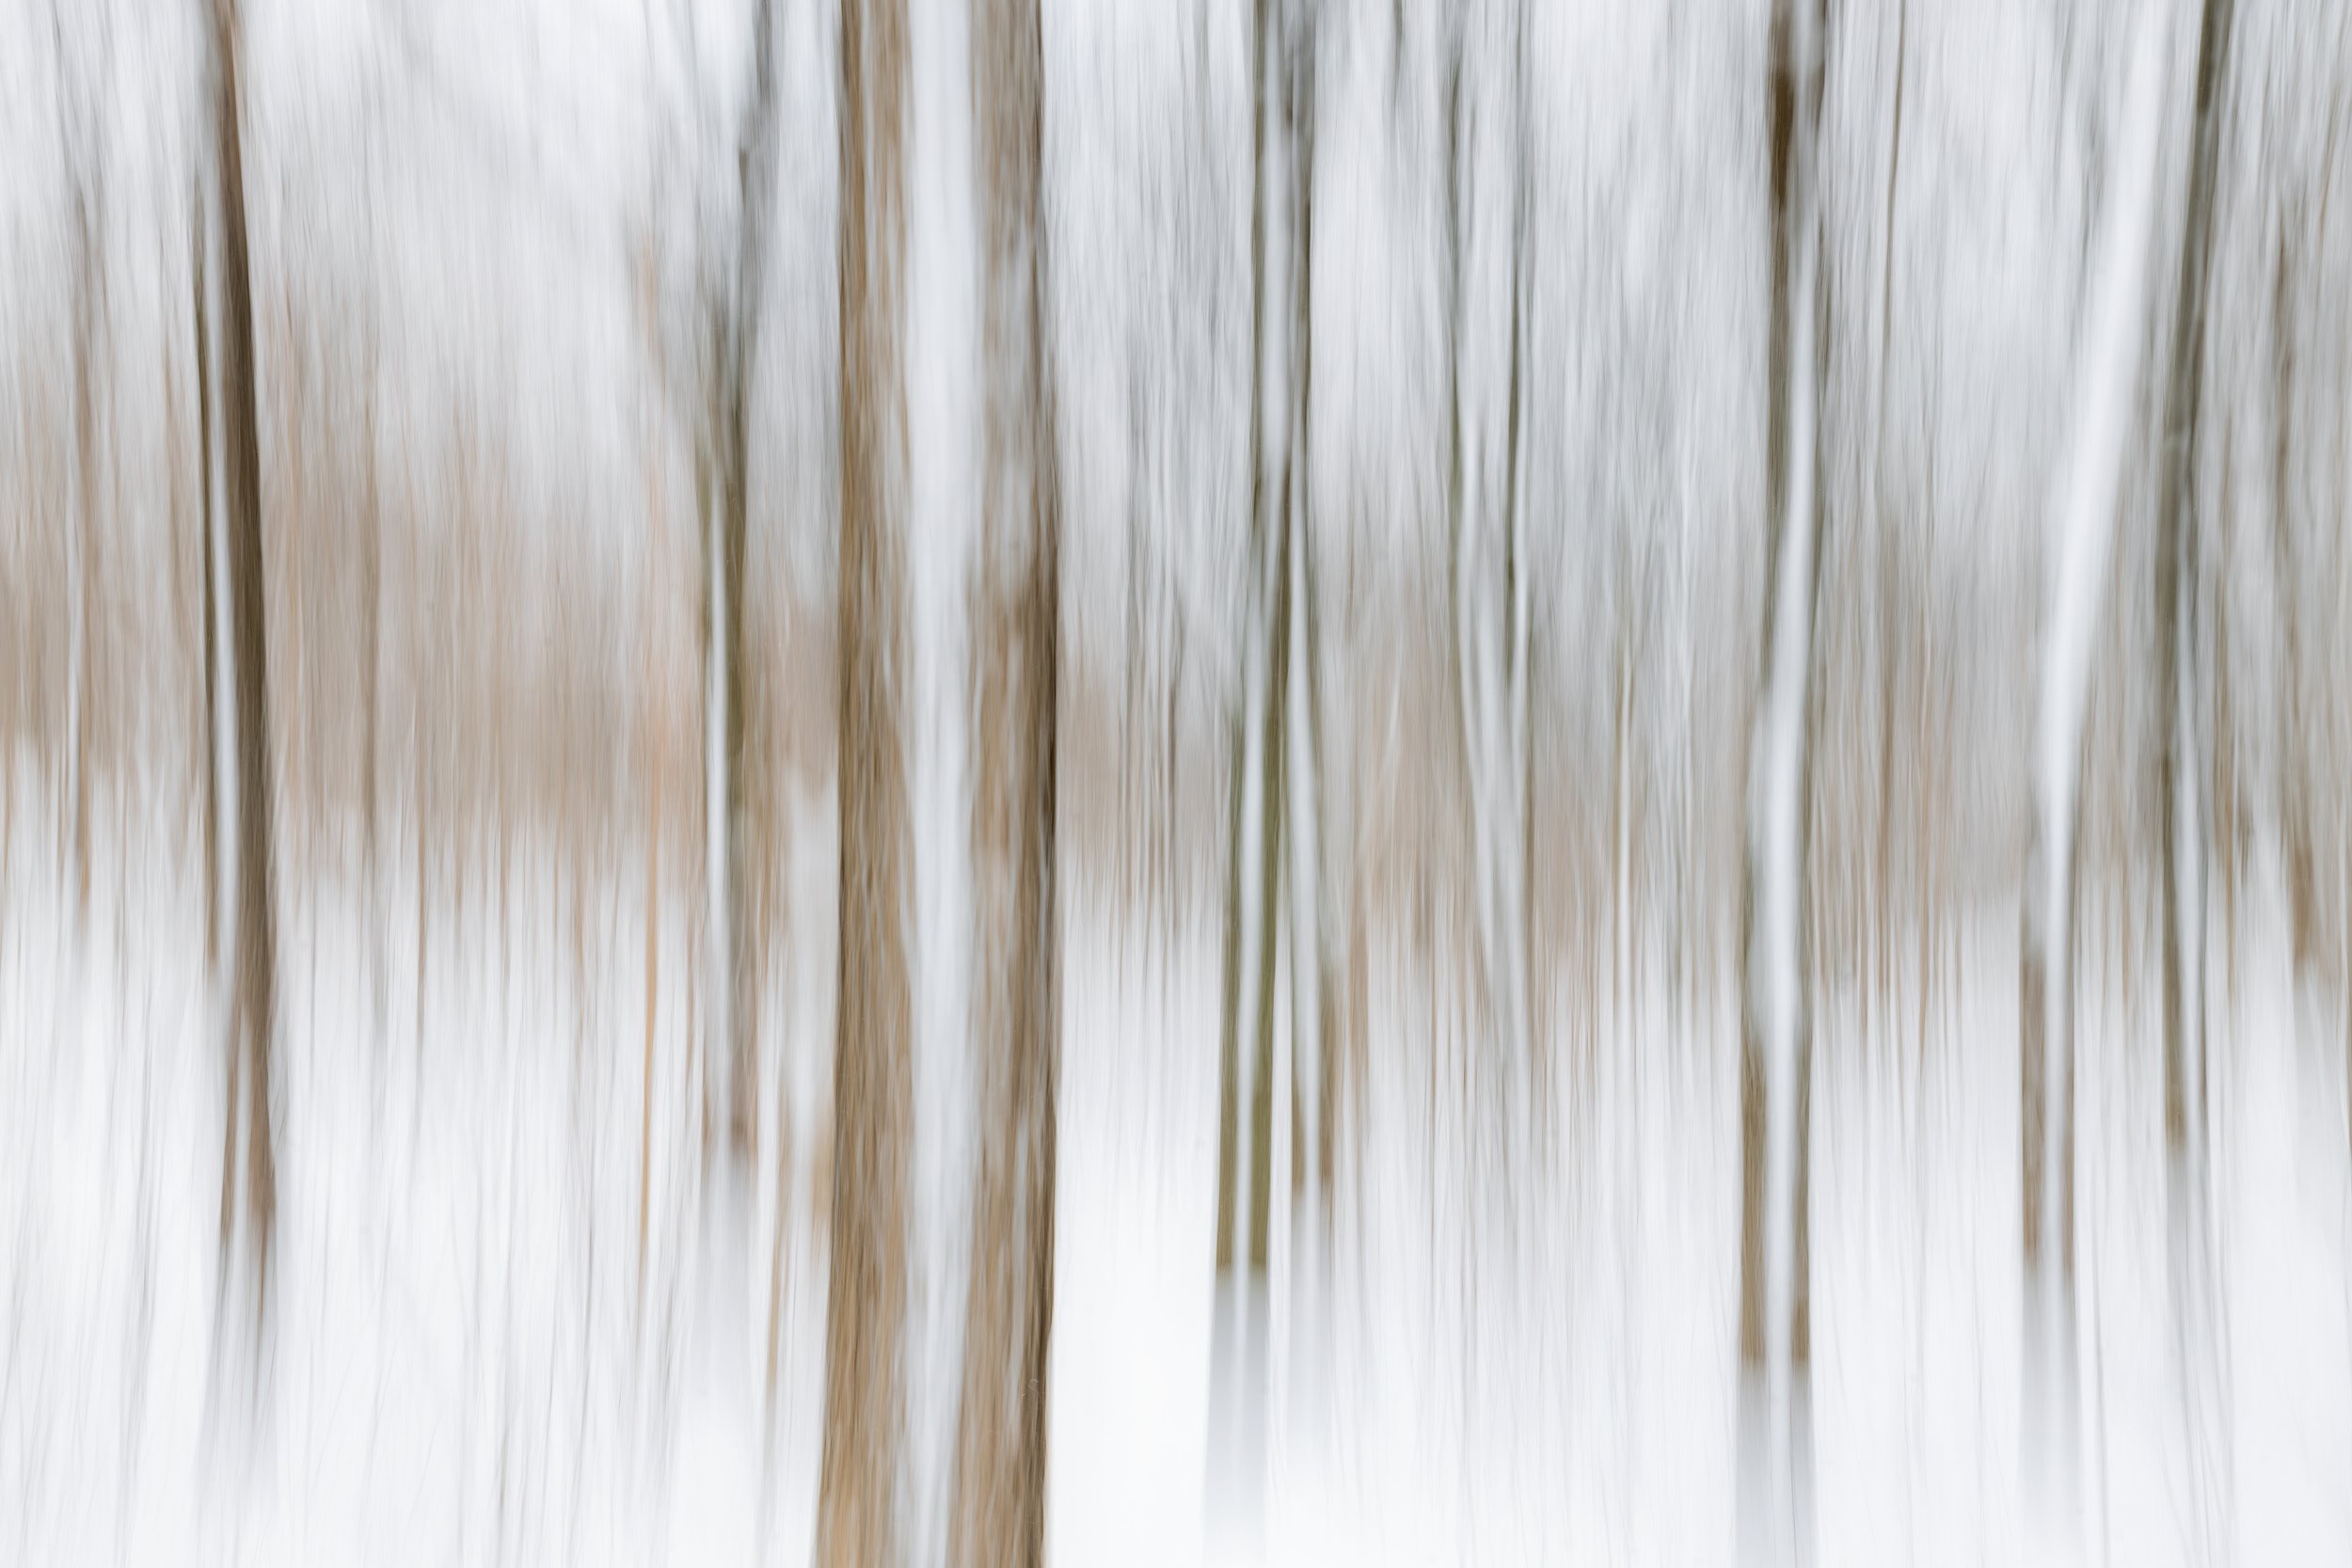 Winter Woods I. Montreal, Quebec (Dec. 2022)